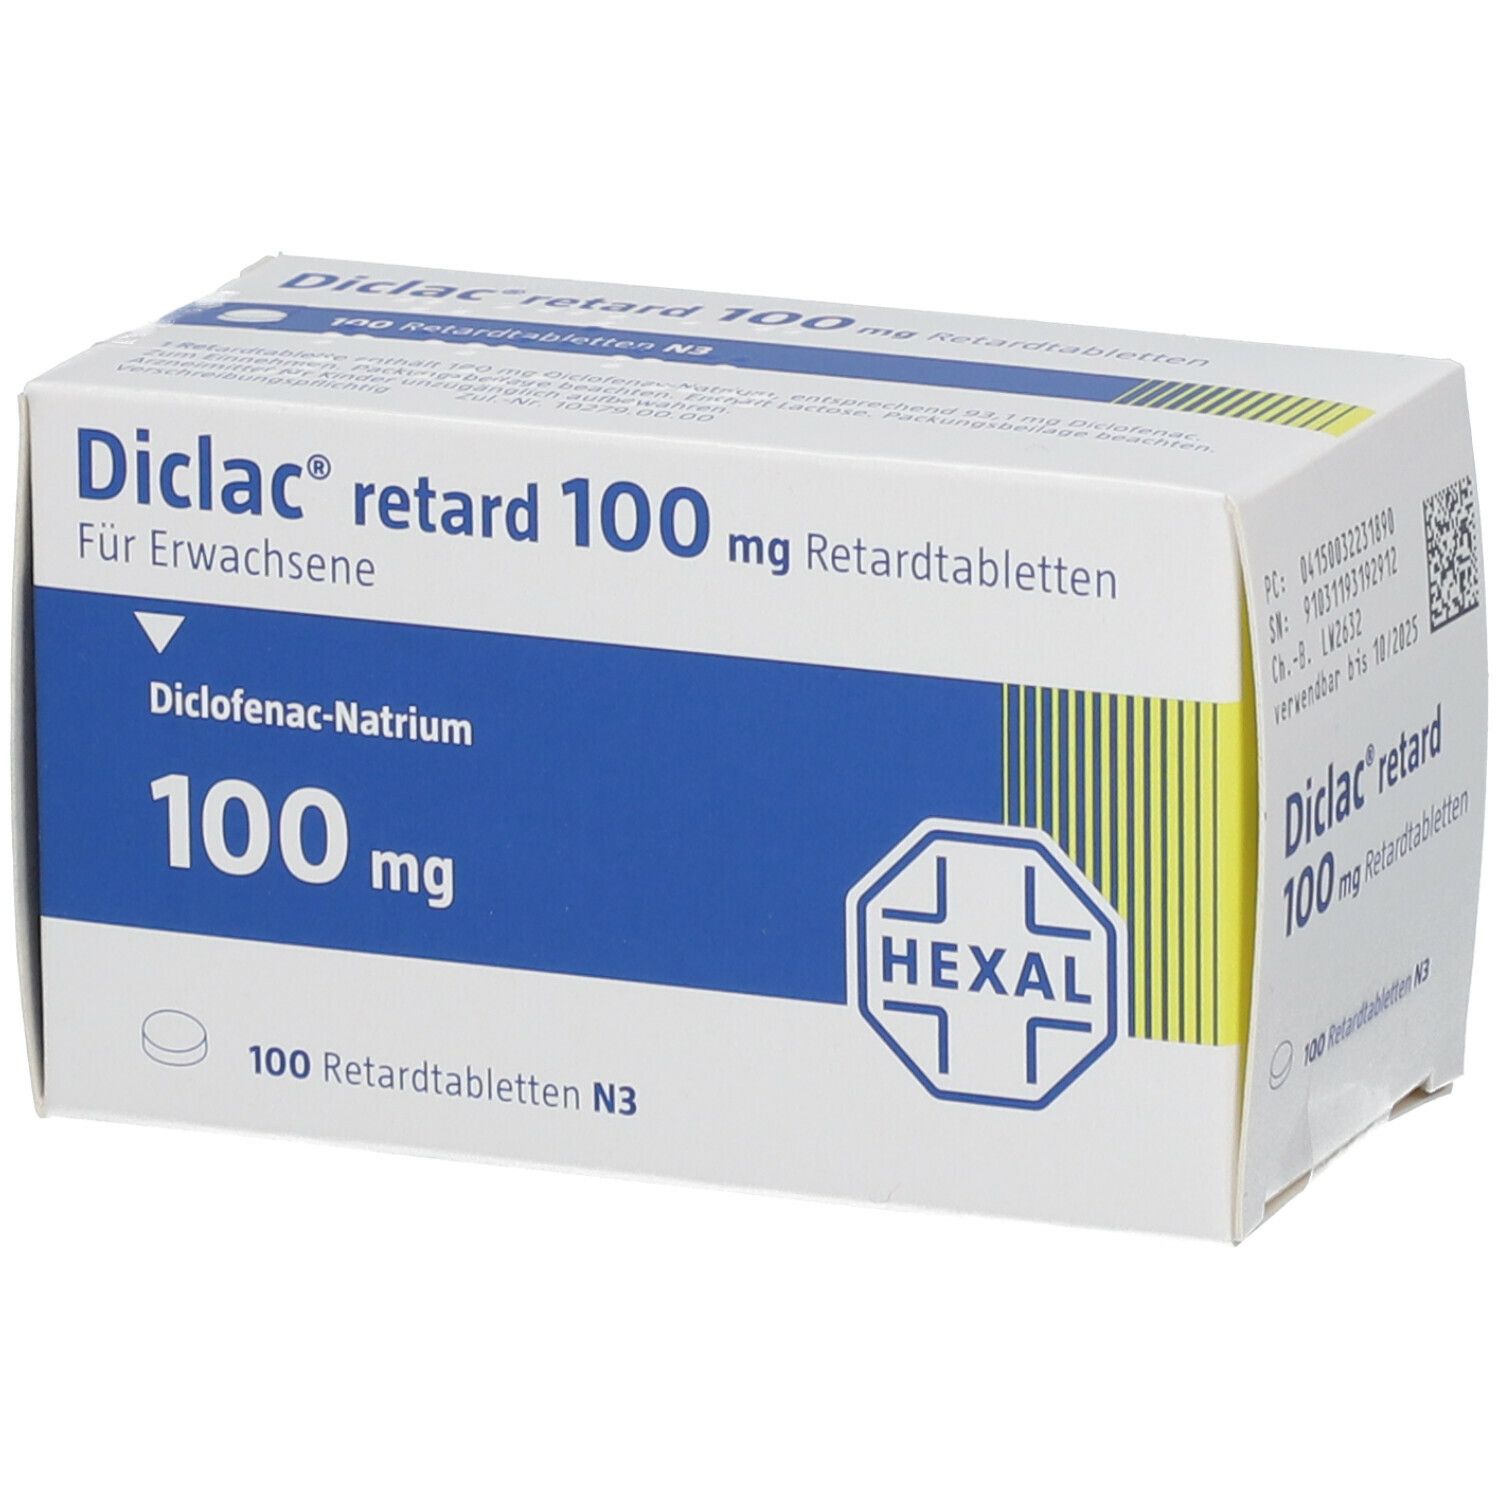 Diclac® retard 100 mg